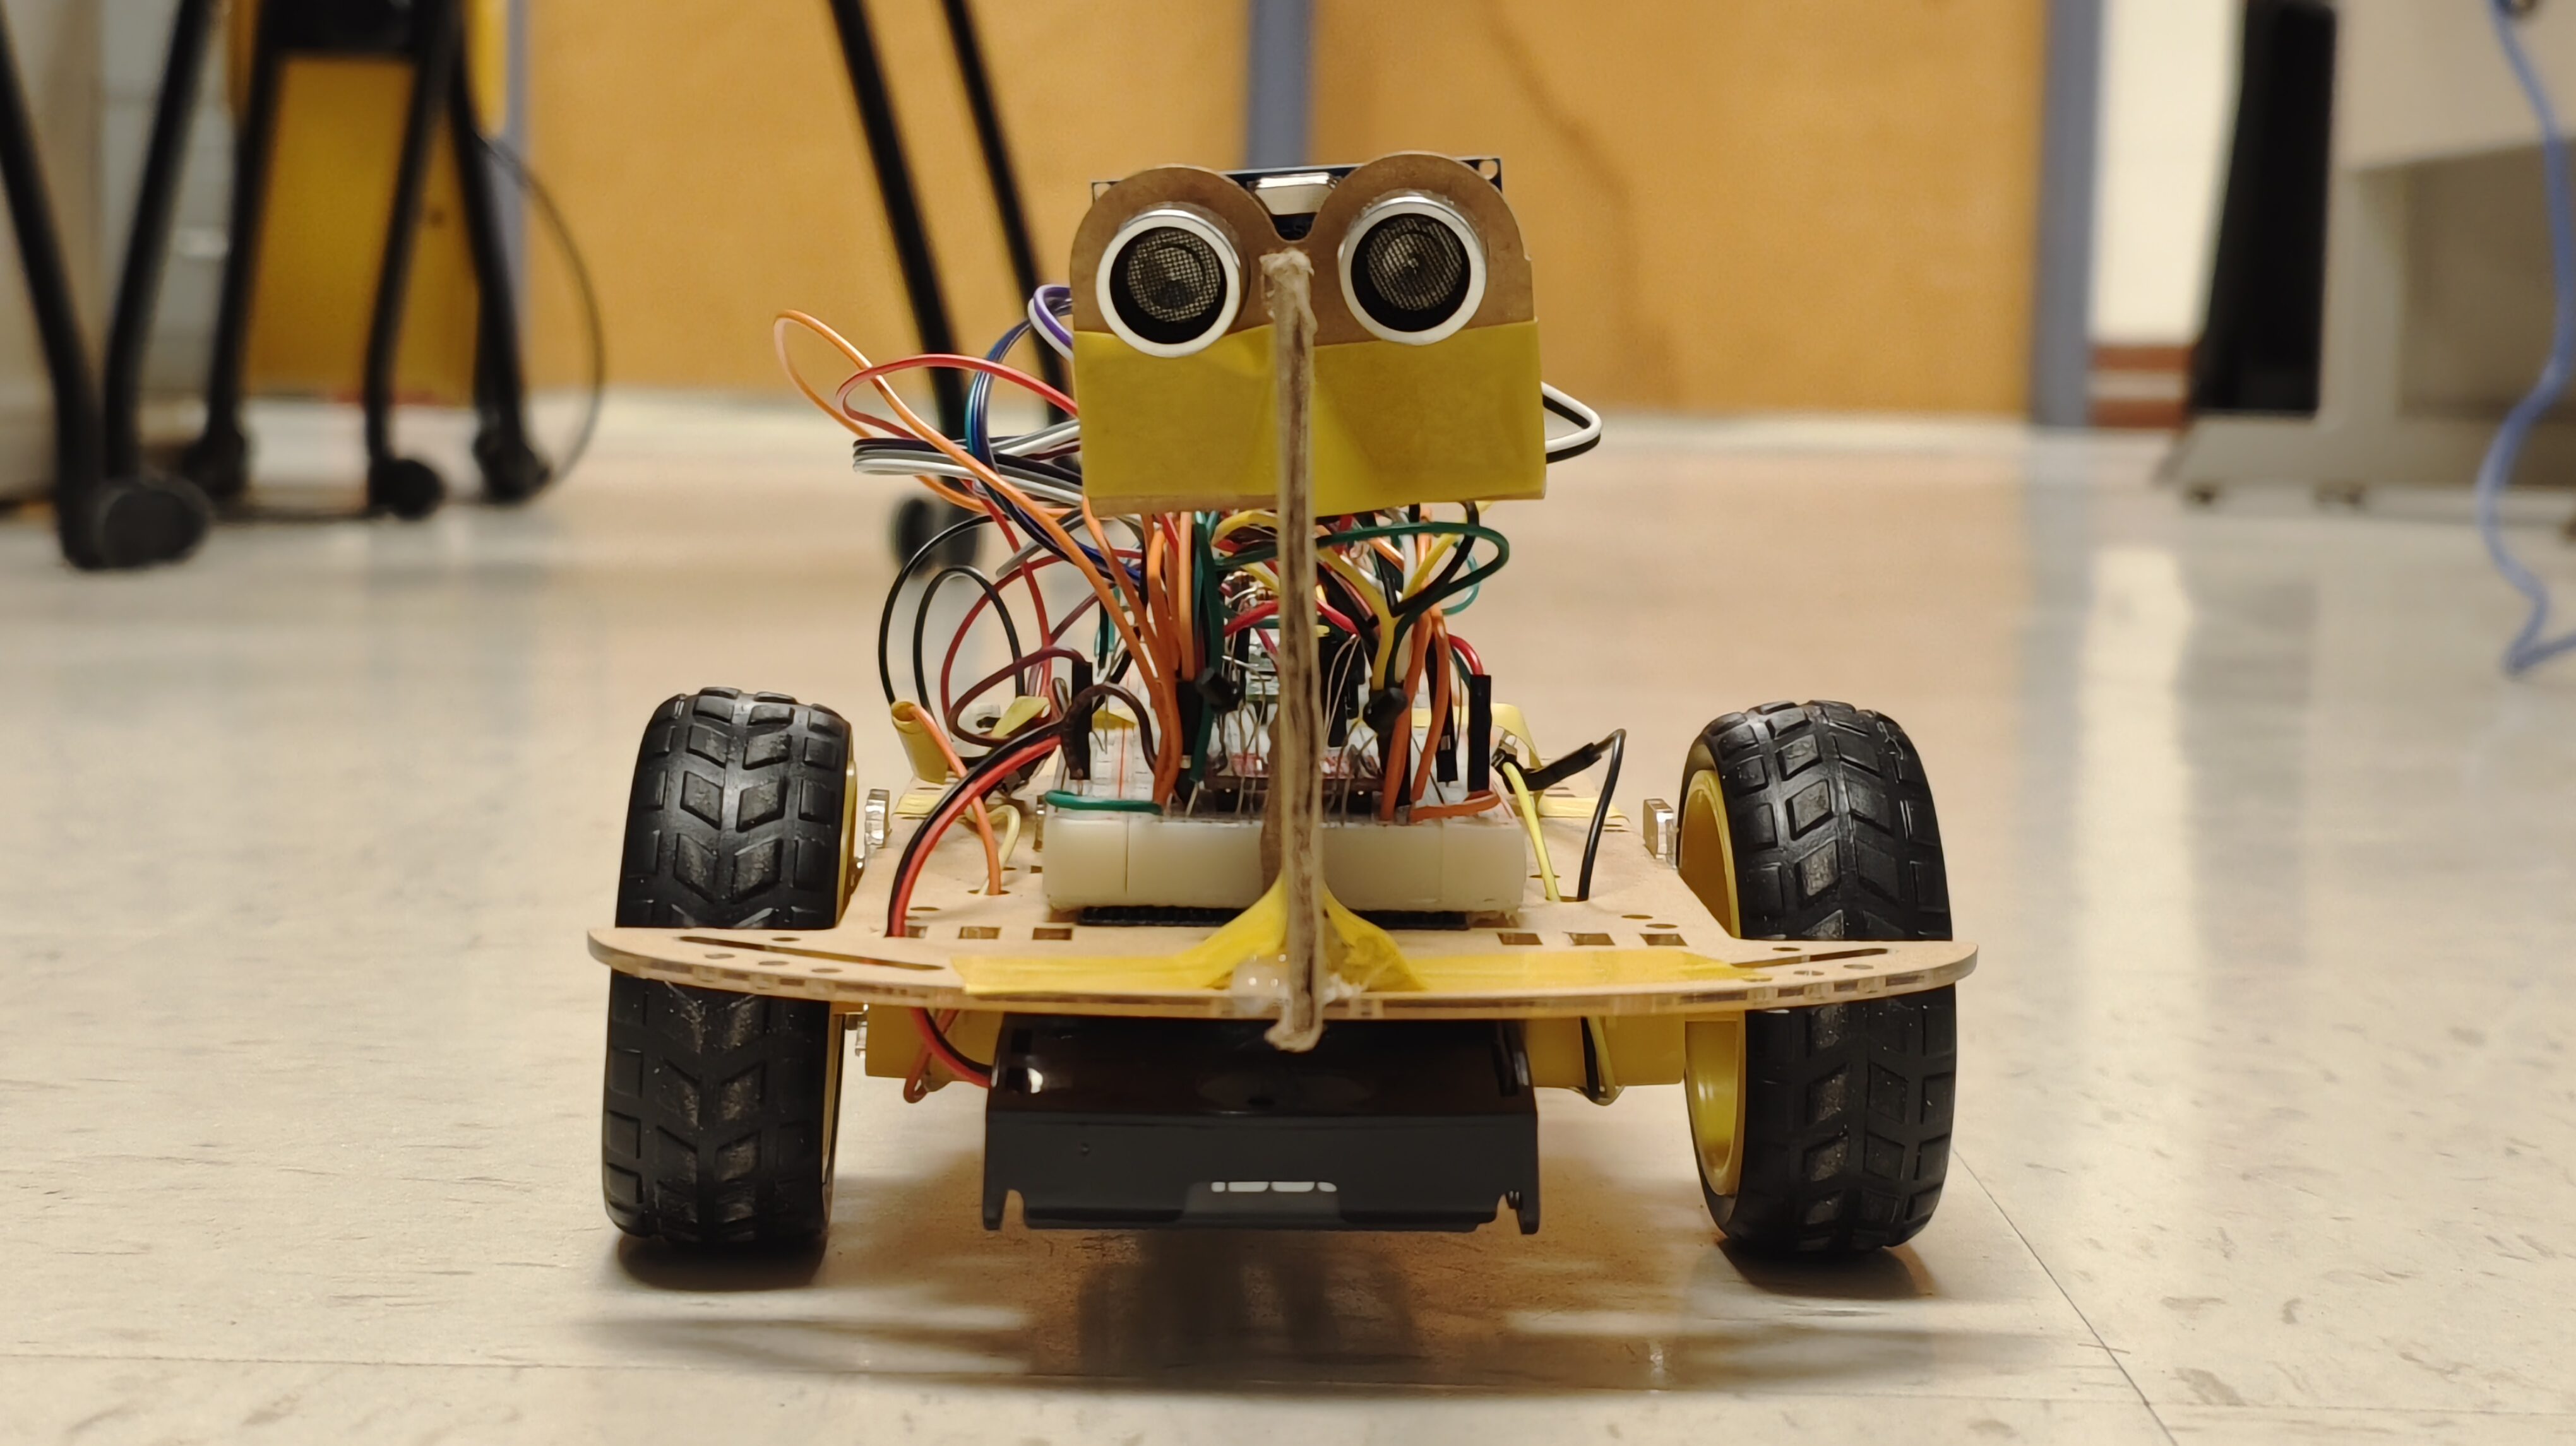 Robot de seguimiento por infrarrojos construido como prueba de concepto para equipaje autónomo